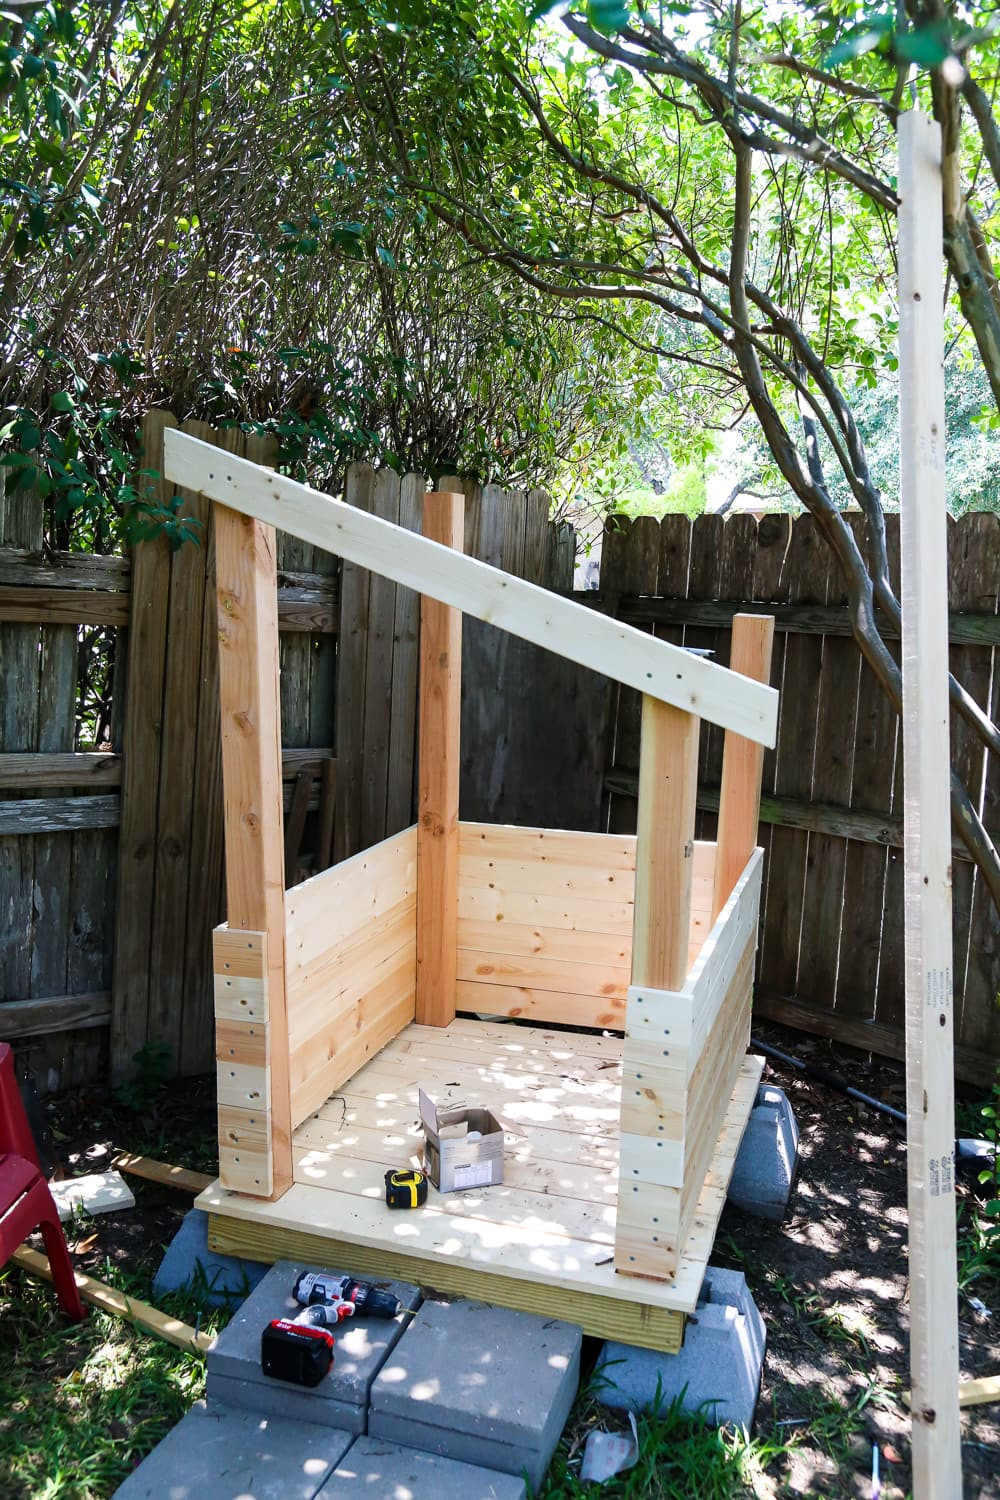 DIY Outdoor Playhouses
 DIY Playhouse How to Build a Backyard Playhouse for Your